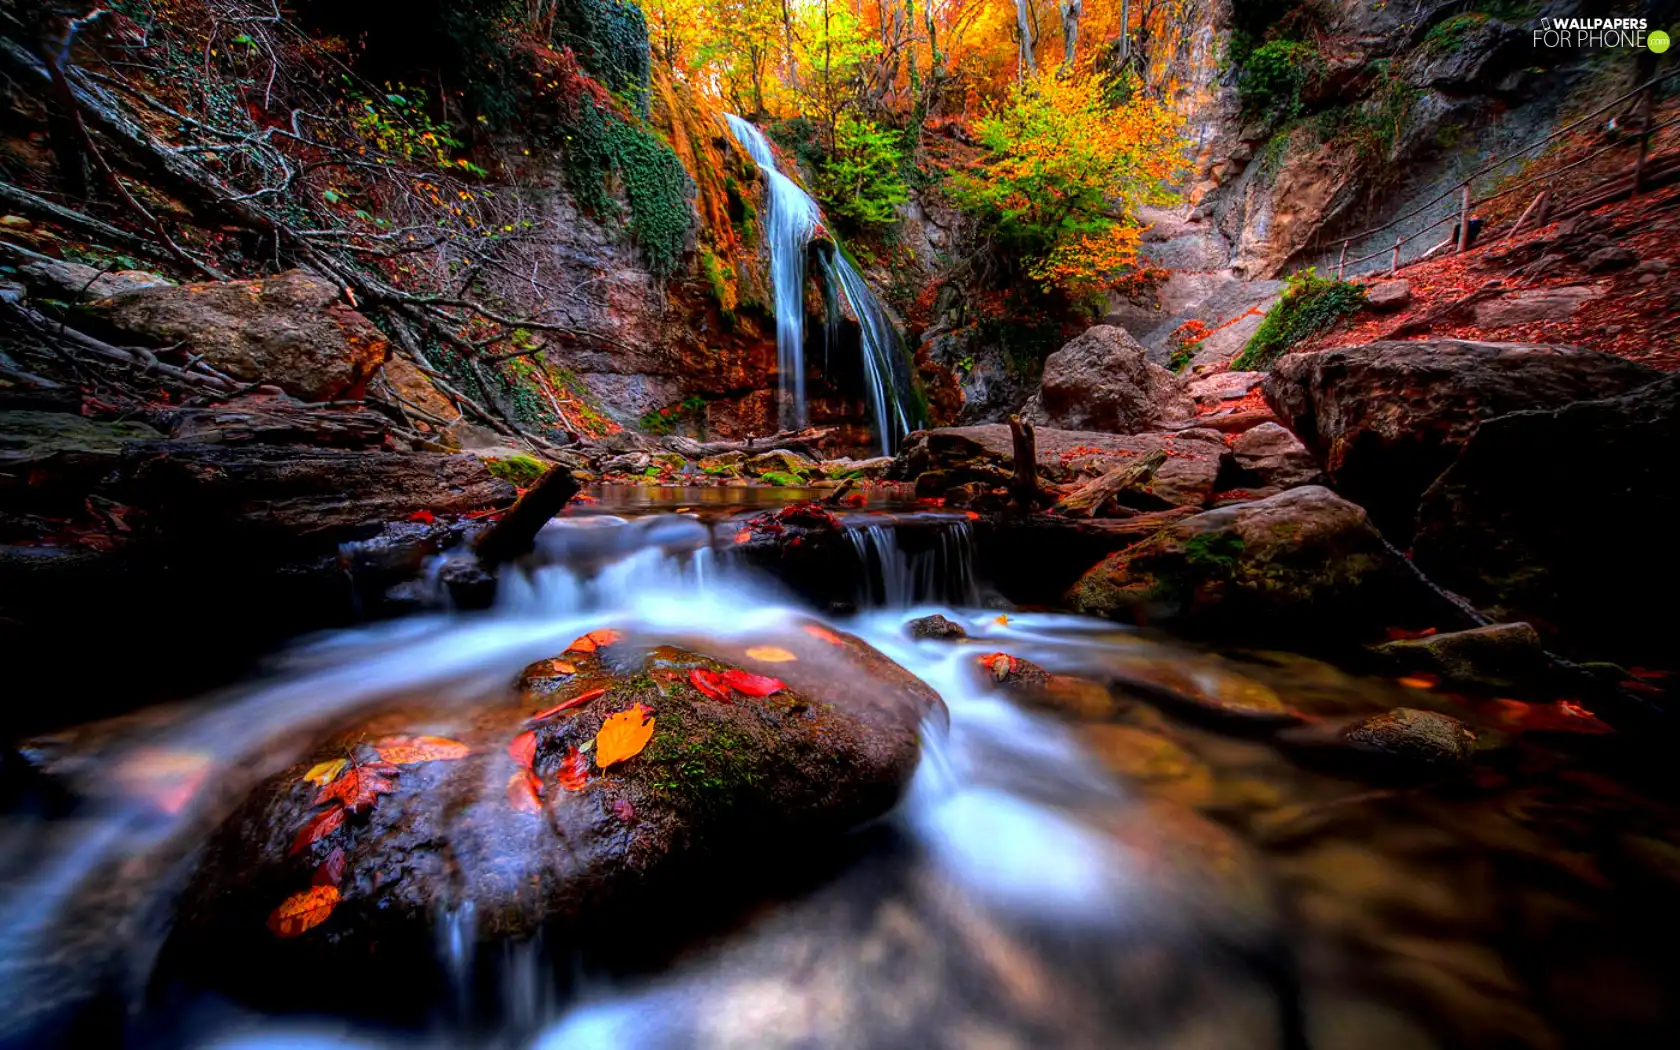 River, waterfall, autumn